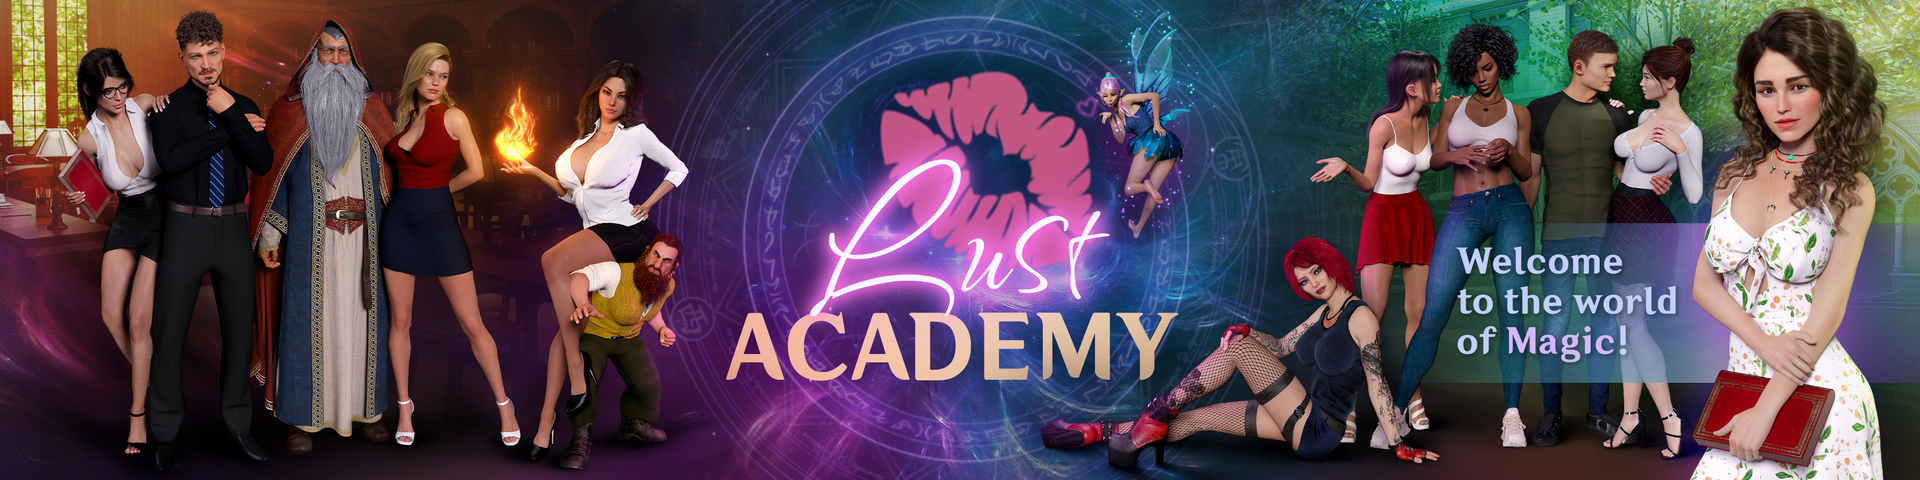 Lust Academy Game Banner